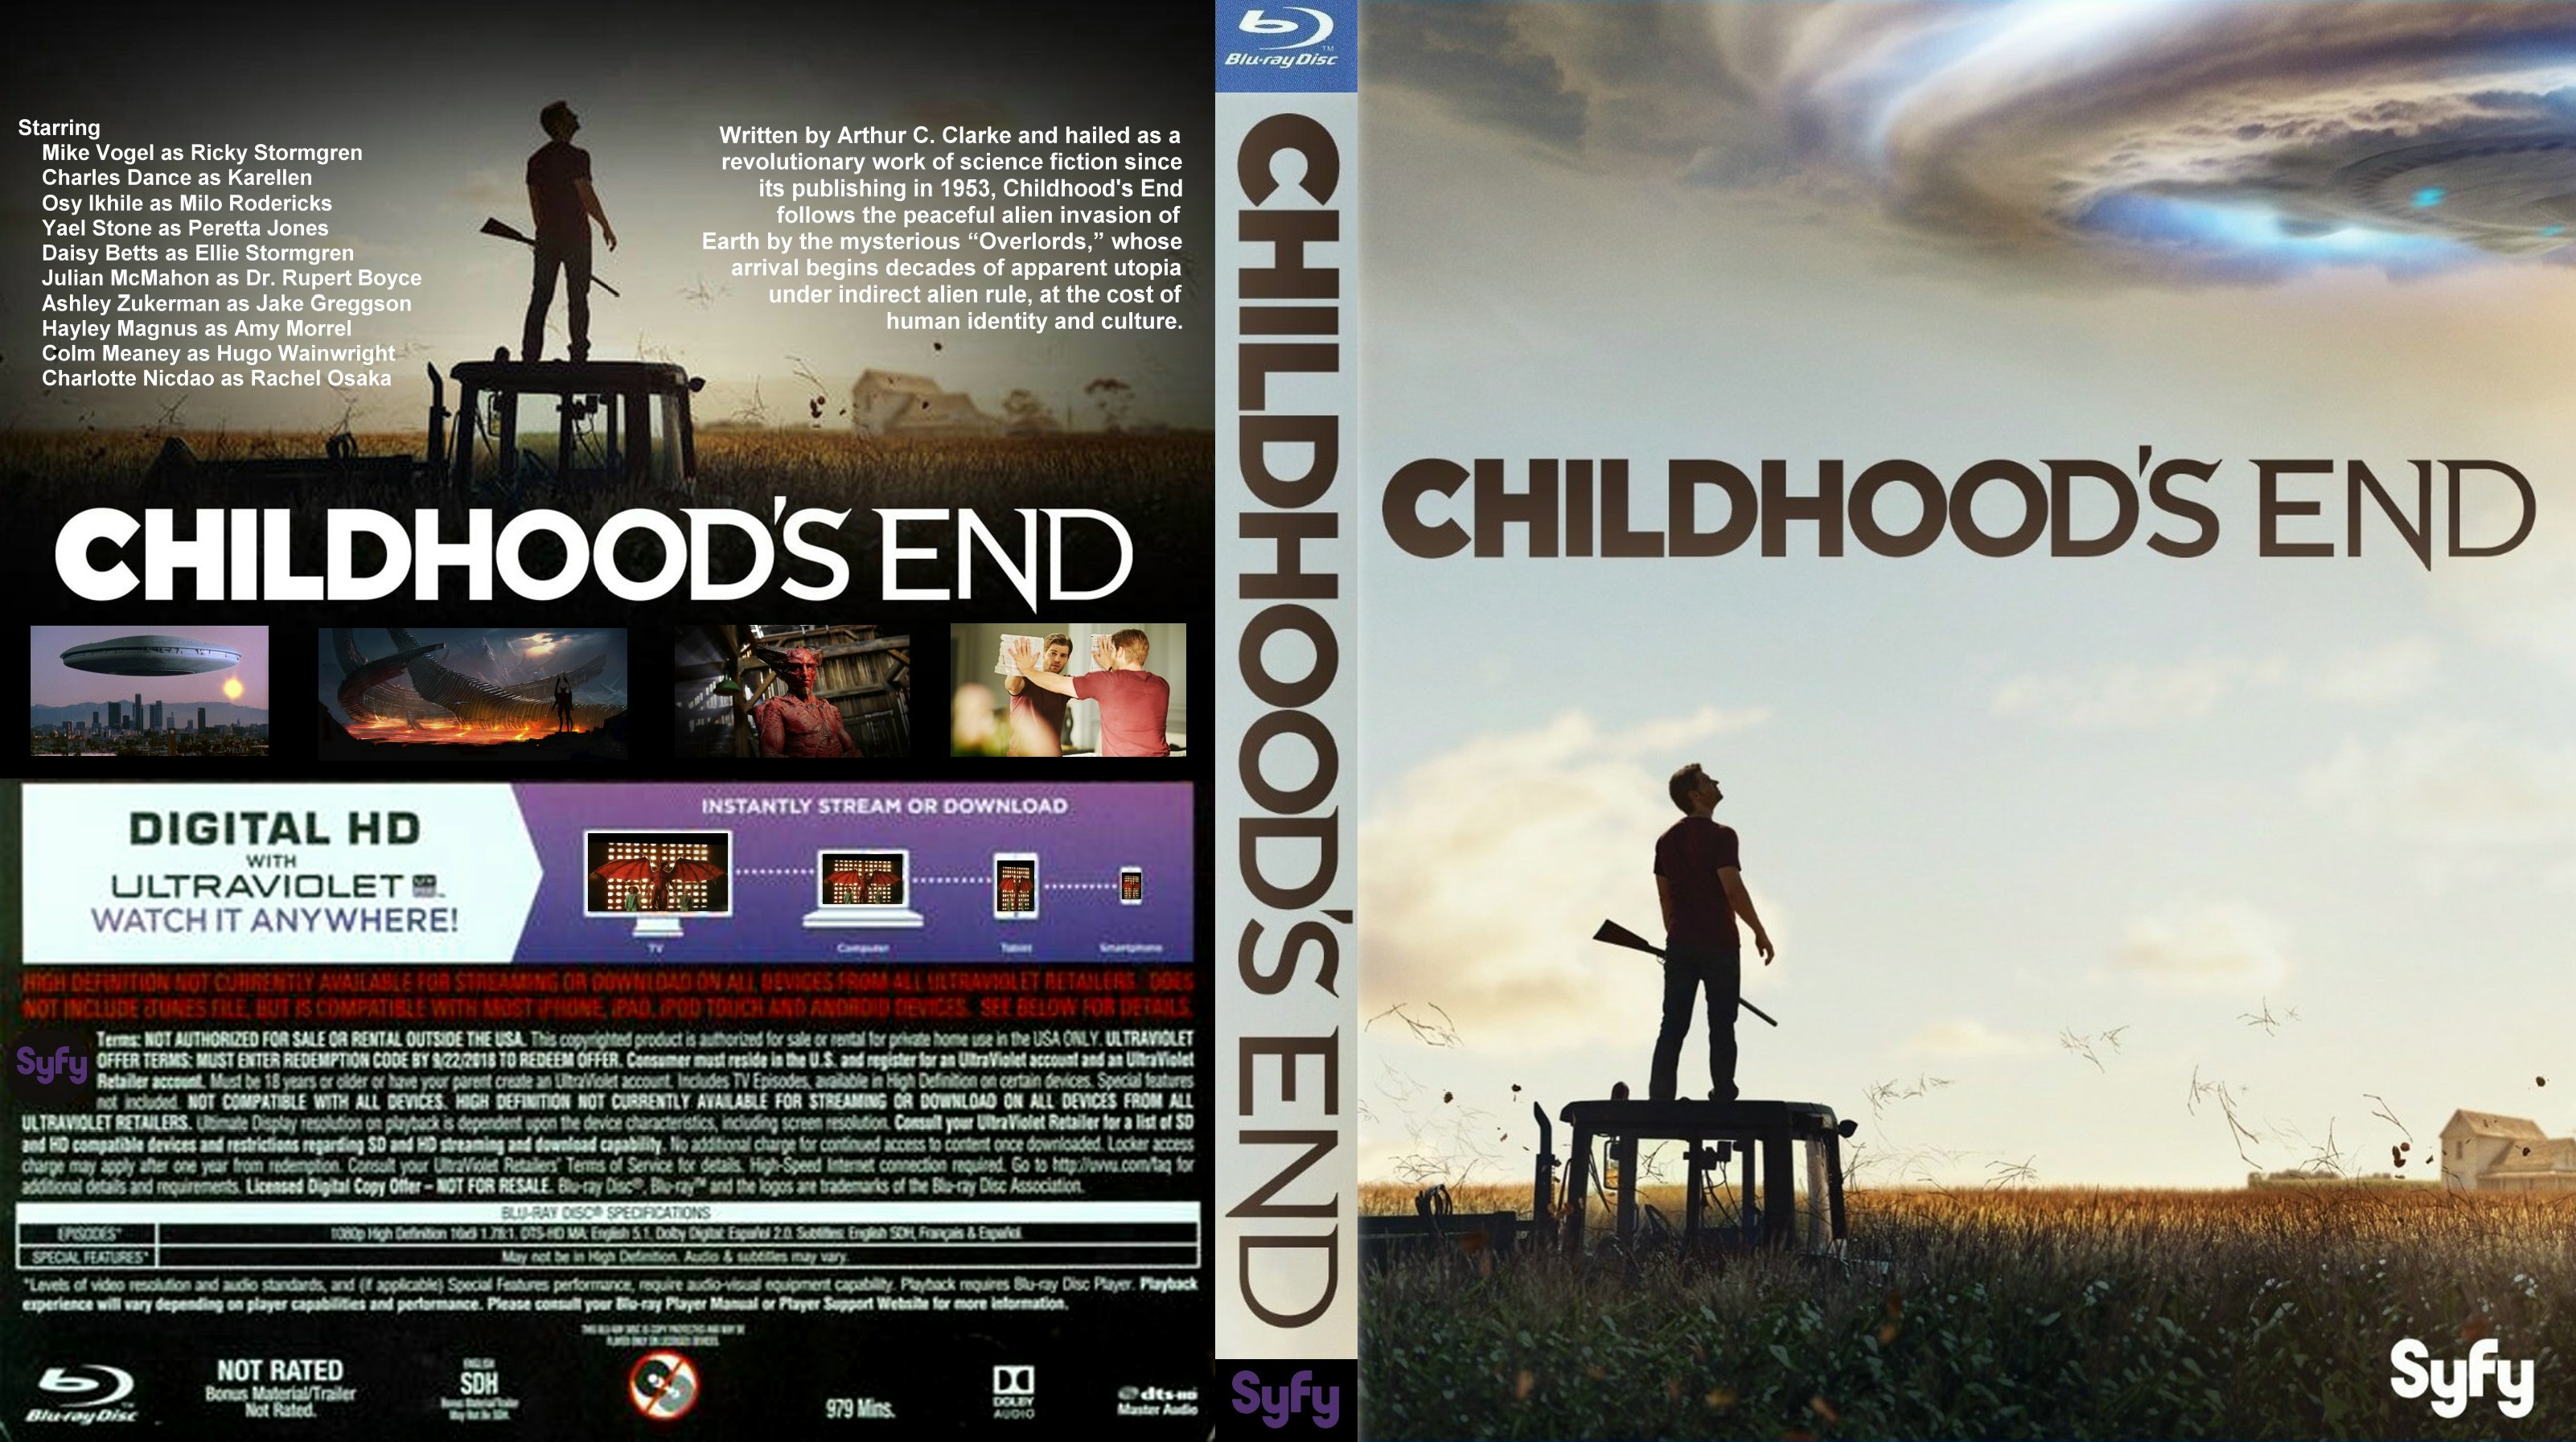 Childhoods End 3 - The Children